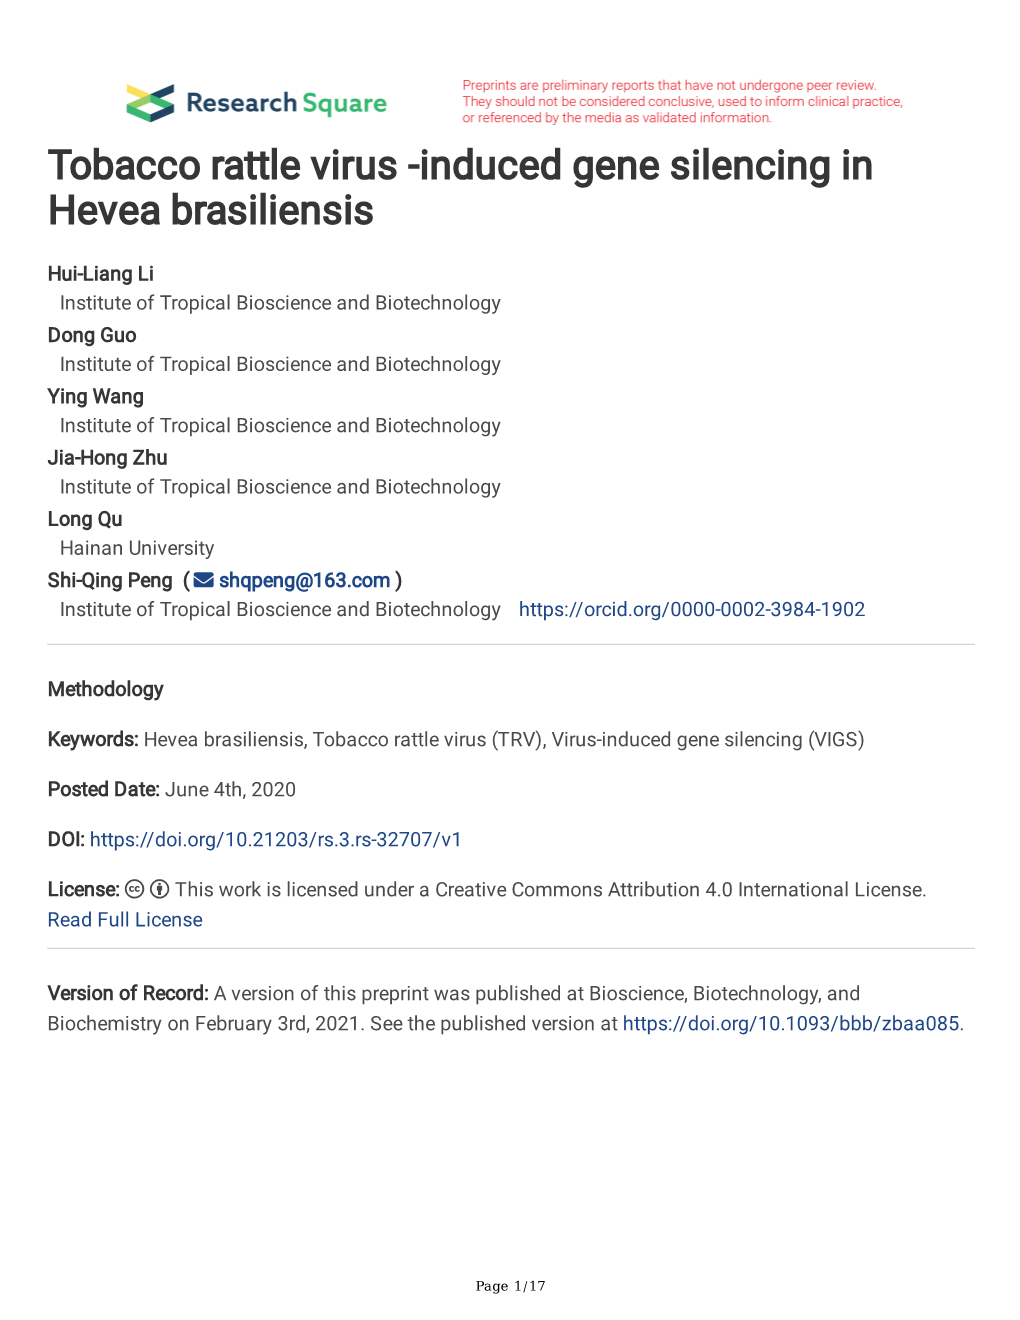 Tobacco Rattle Virus -Induced Gene Silencing in Hevea Brasiliensis